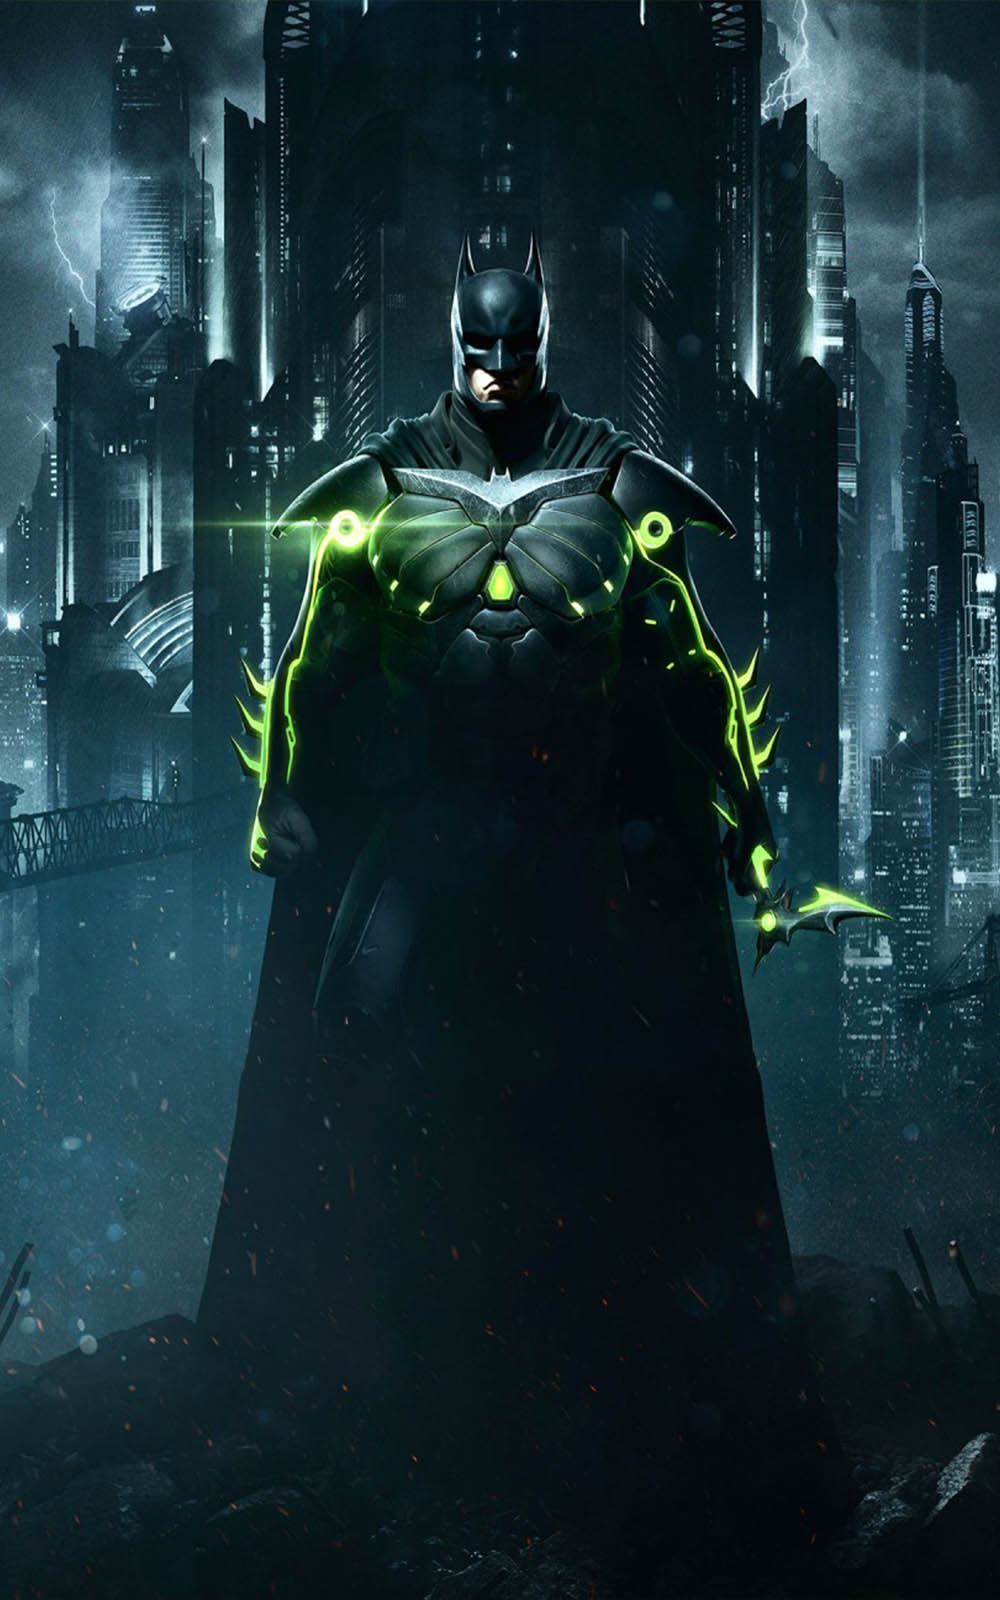 Batman Injustice 2 - Download Free HD Mobile Wallpapers